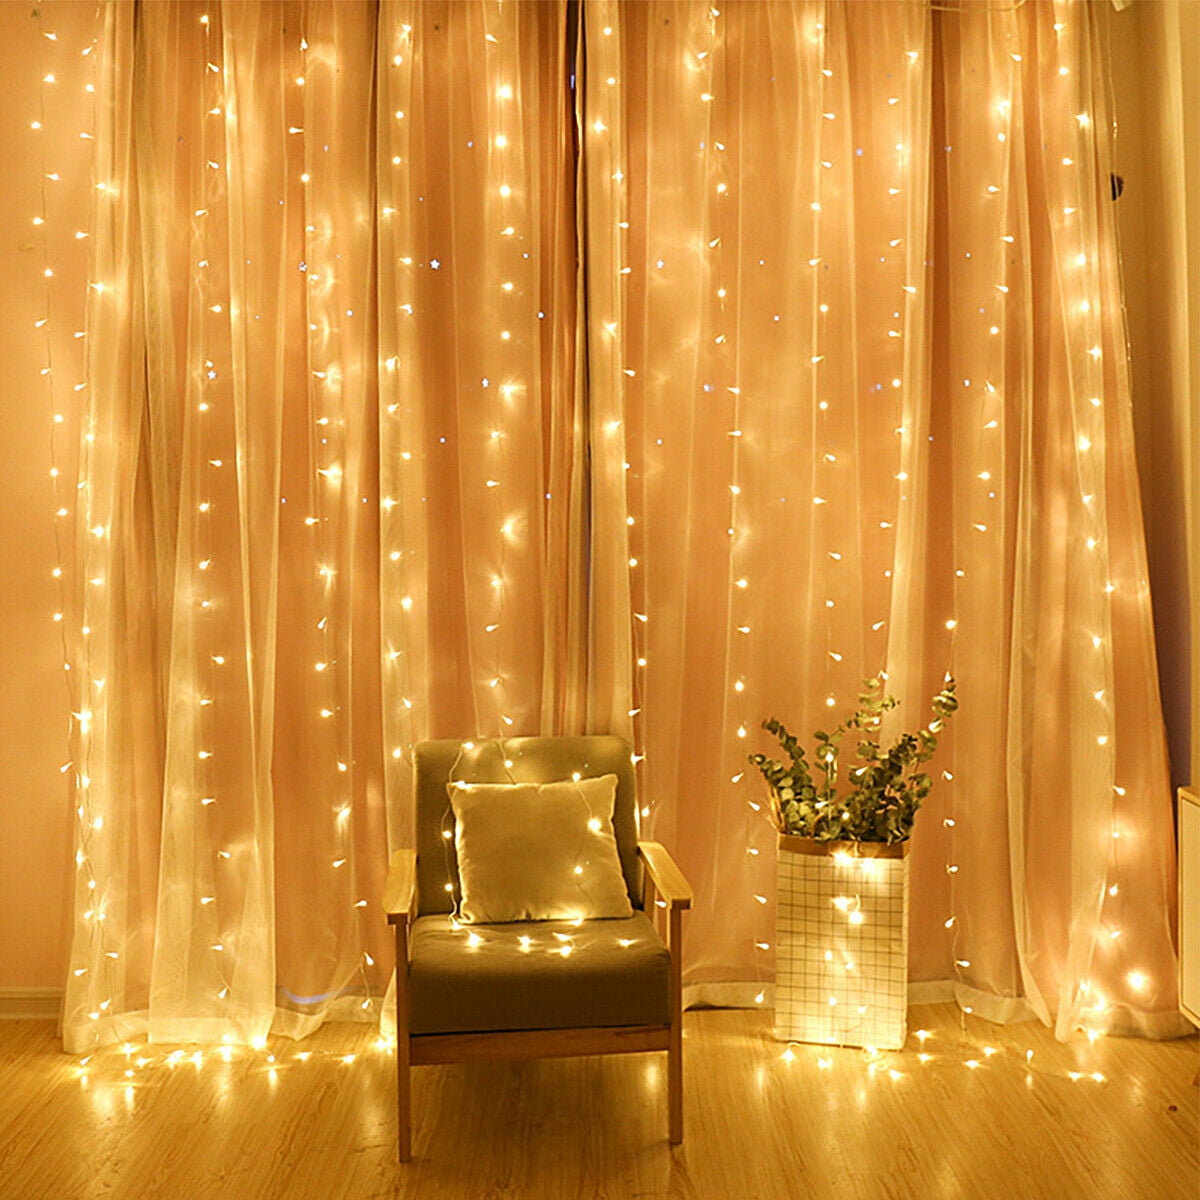 LED Curtain Lights Multi-Function Glow 6 Feet White 200 LED 